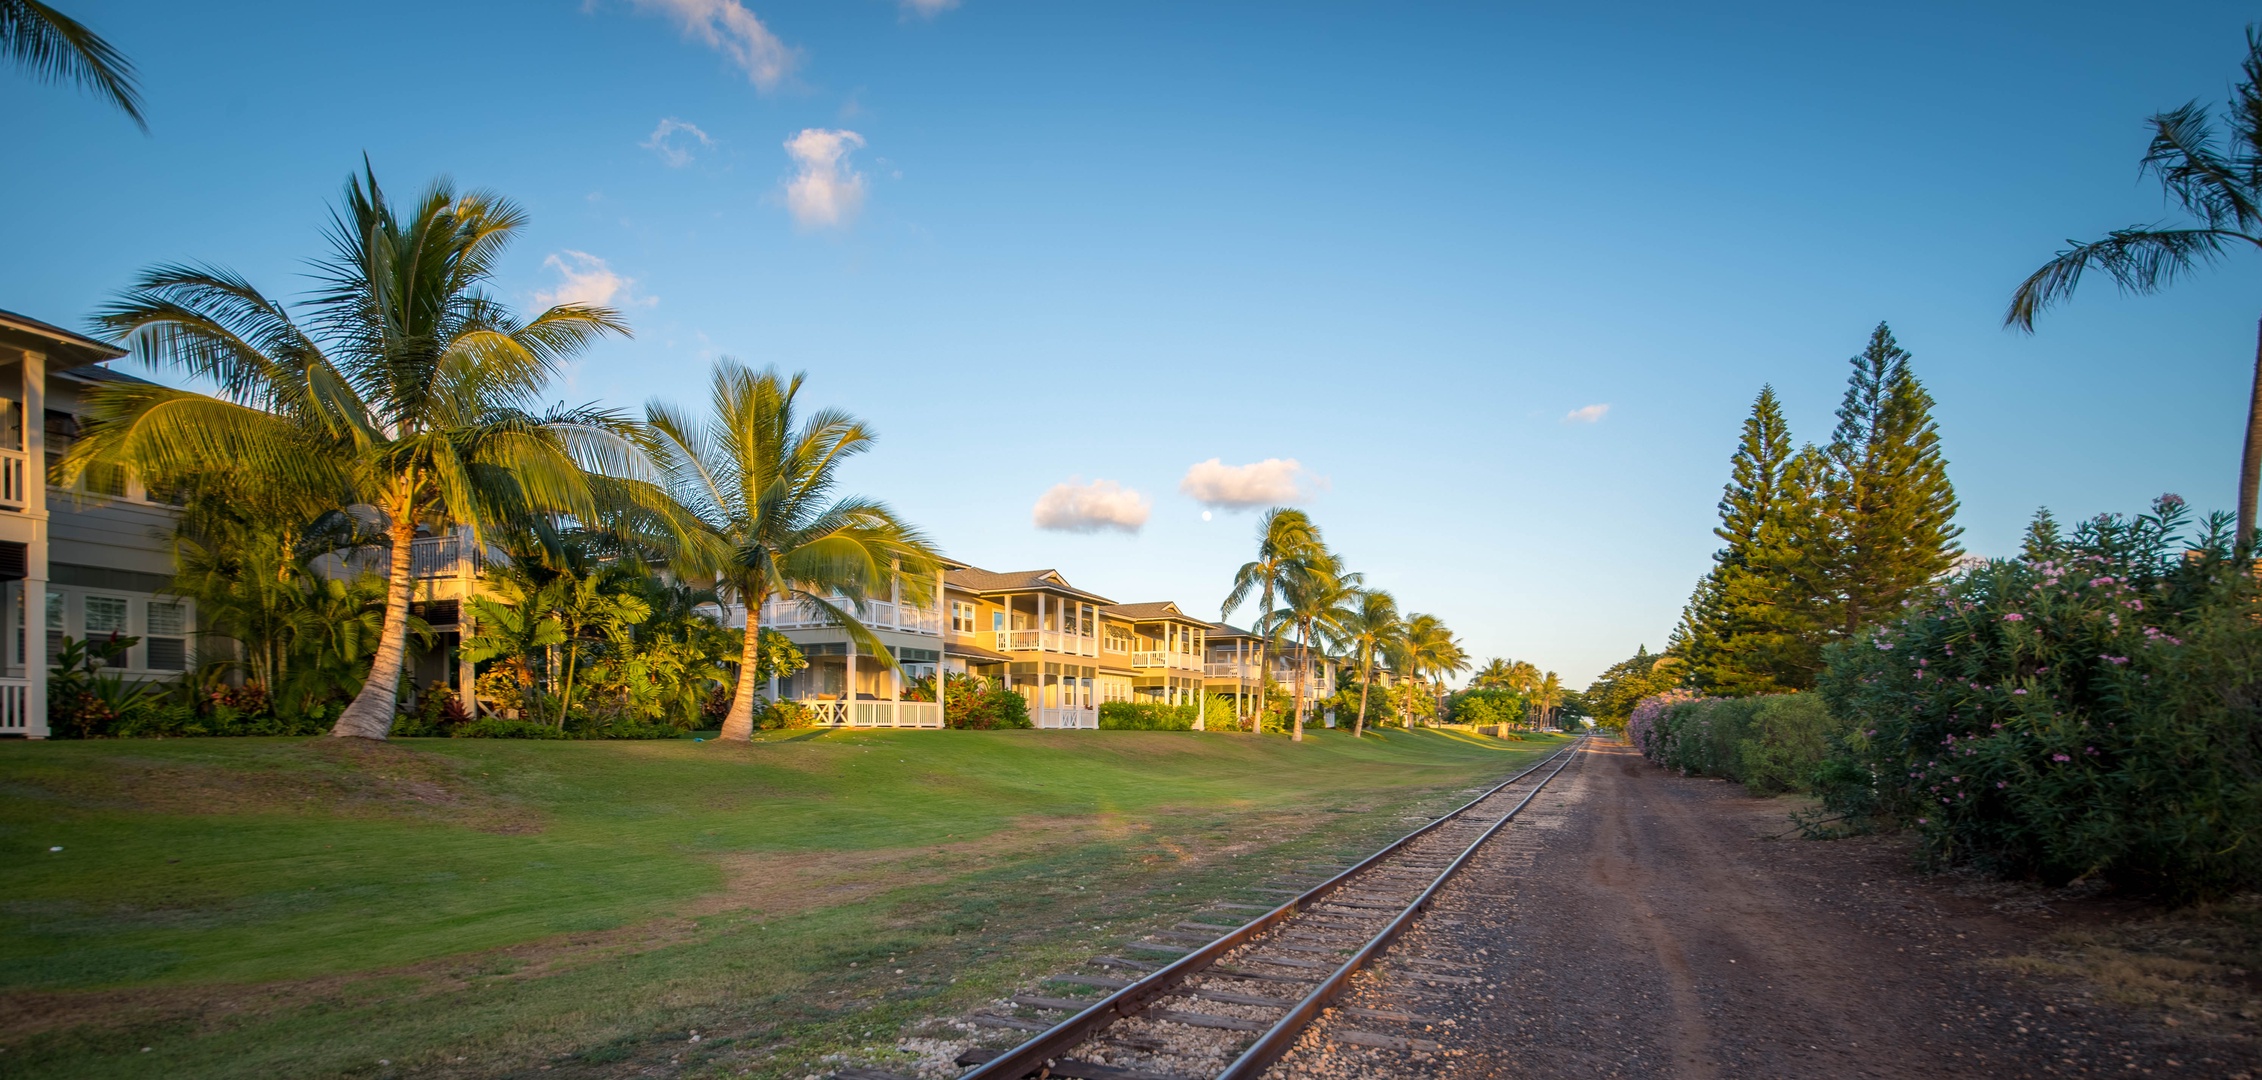 Kapolei Vacation Rentals, Coconut Plantation 1074-1 - Train tracks on the island.